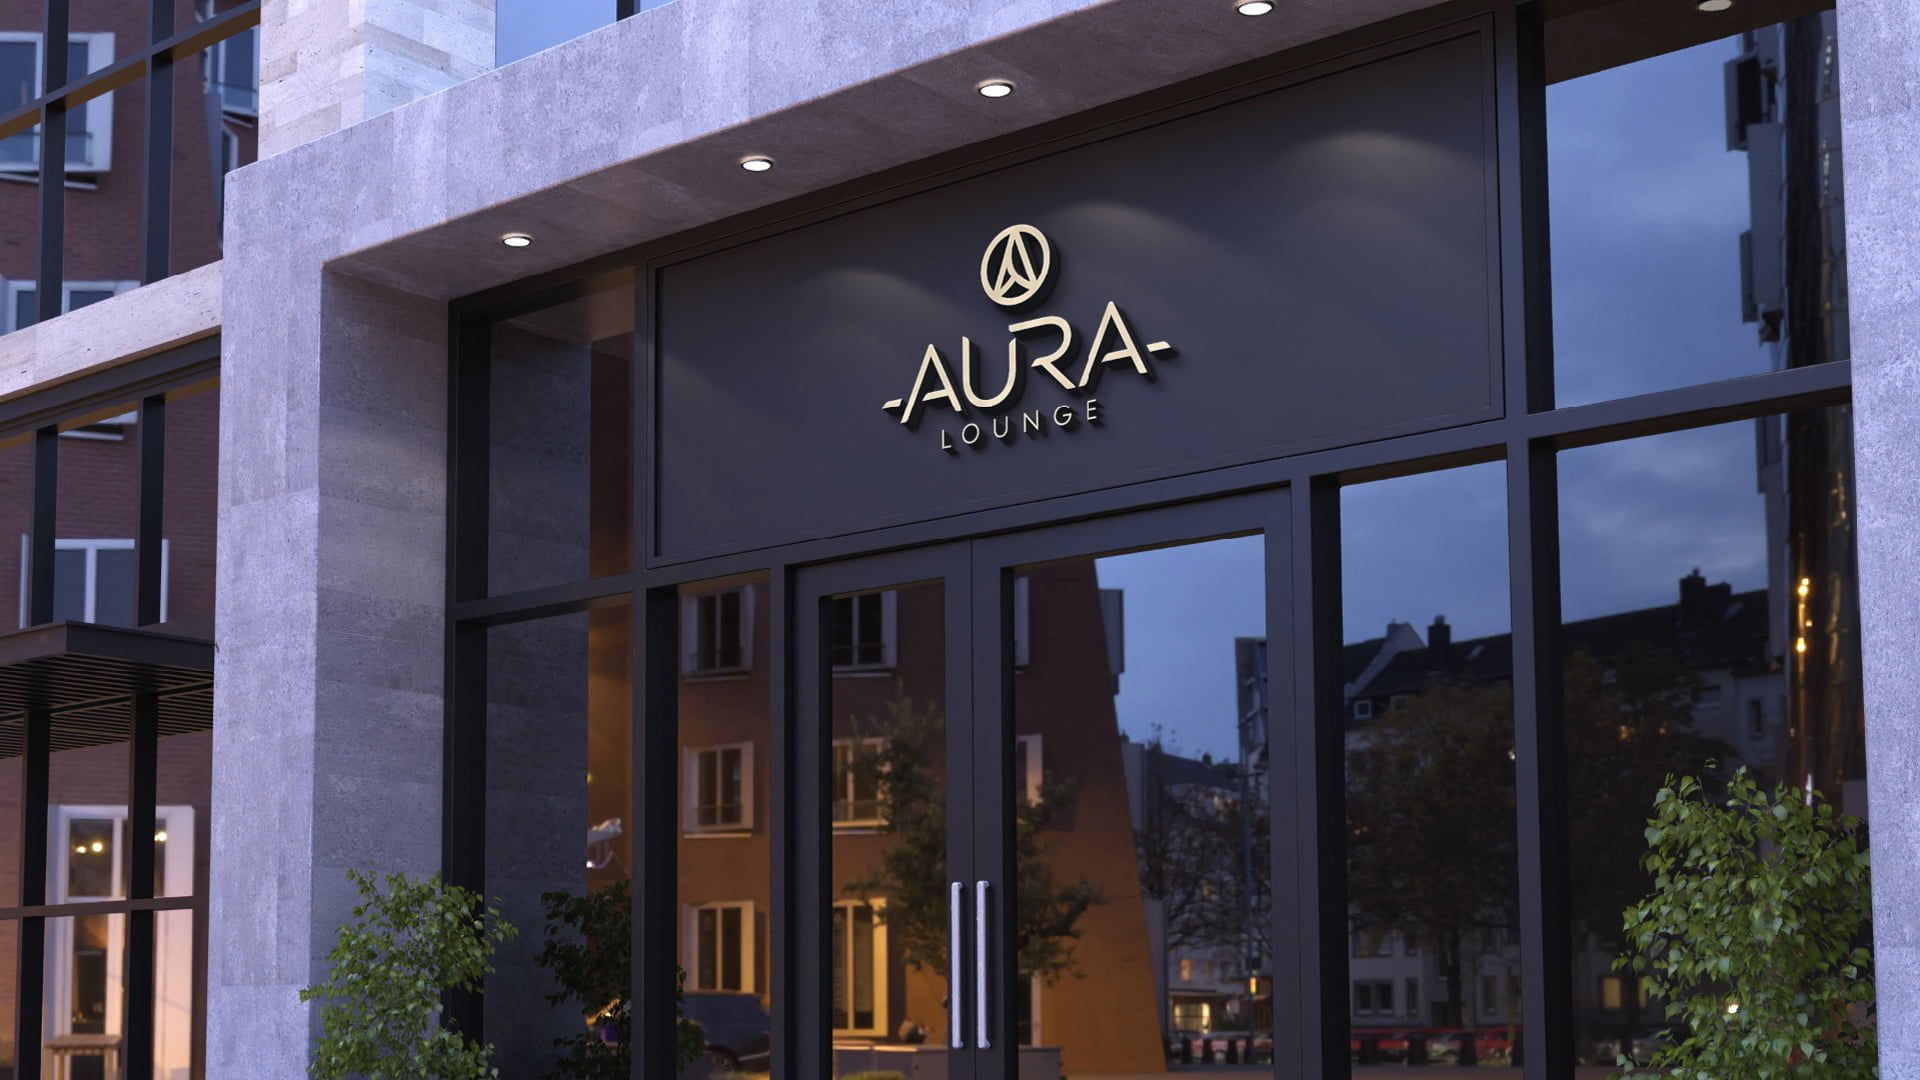 AURA Lounge Corporate Identity Design